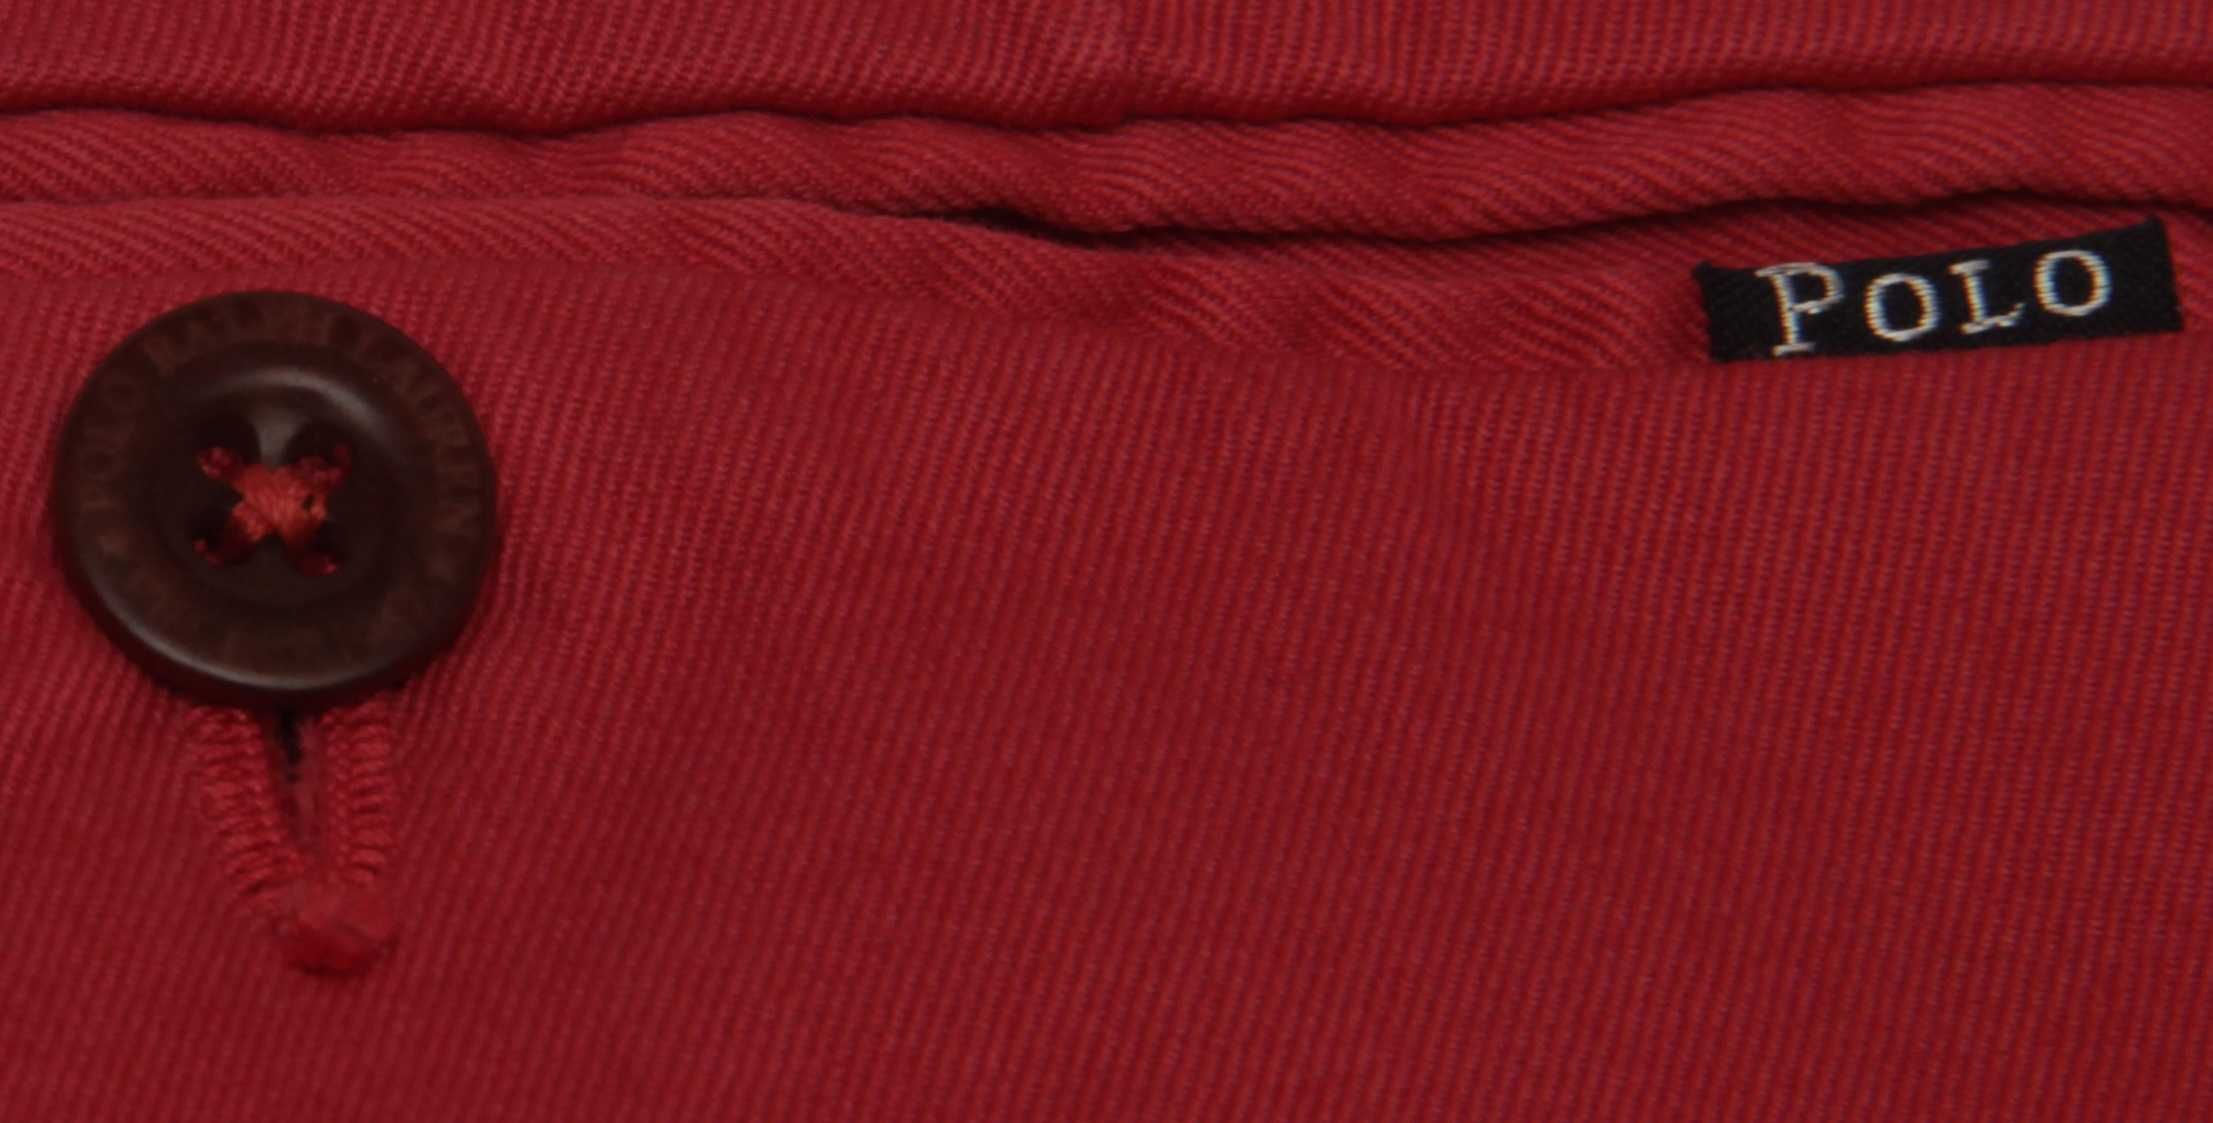 Polo Ralph Lauren 38 34 preppy fit чино брюки из хлопка